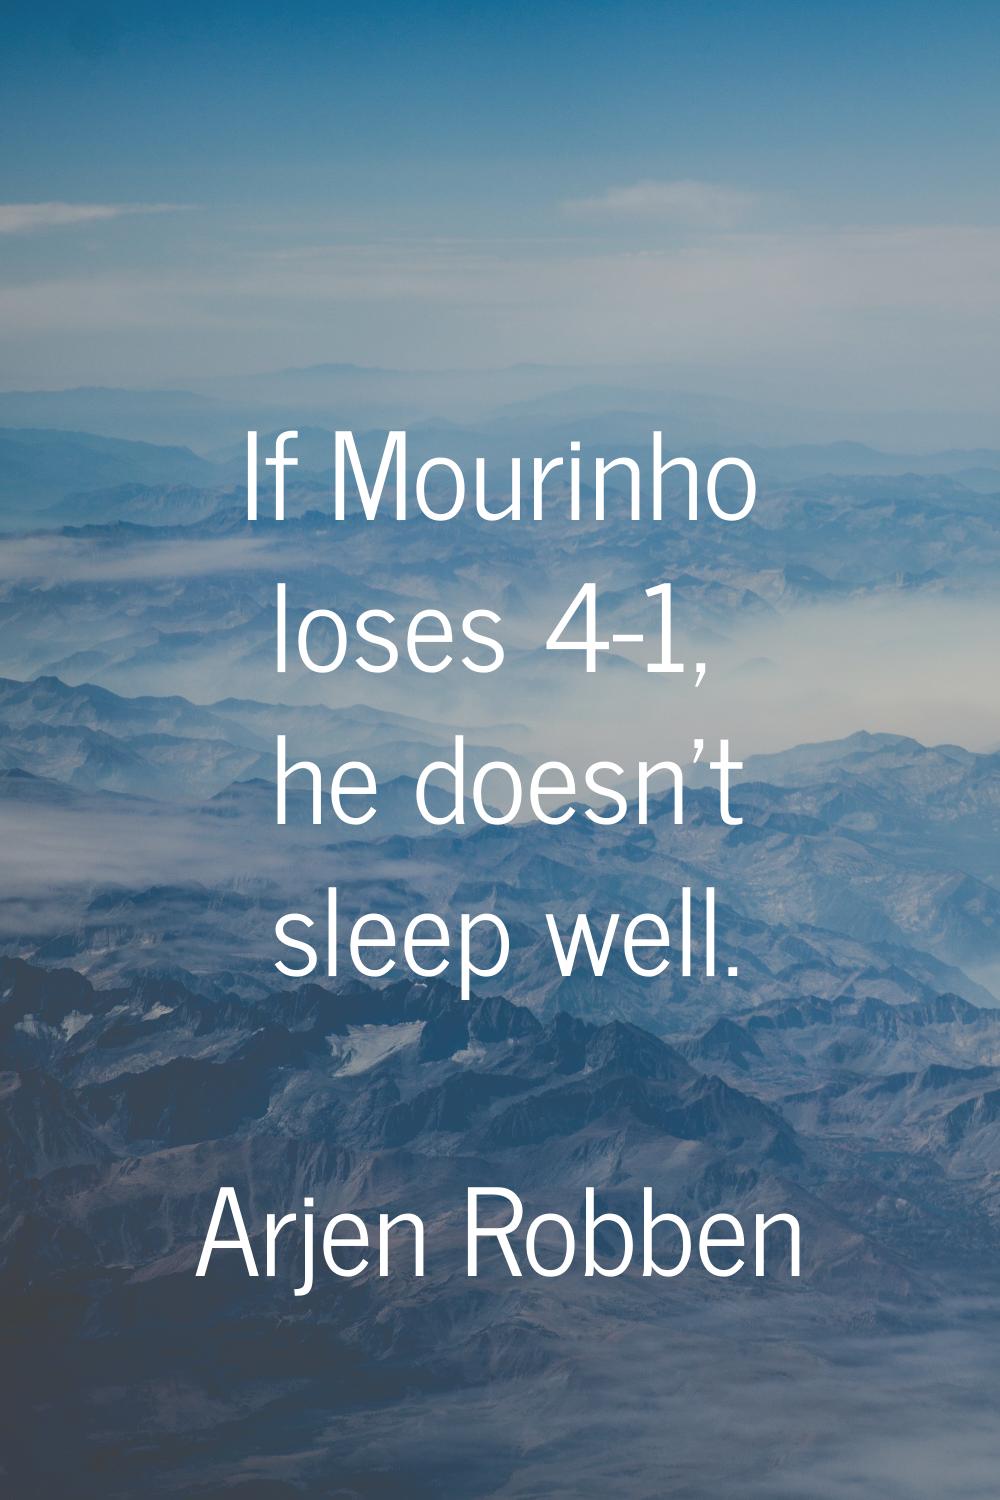 If Mourinho loses 4-1, he doesn't sleep well.